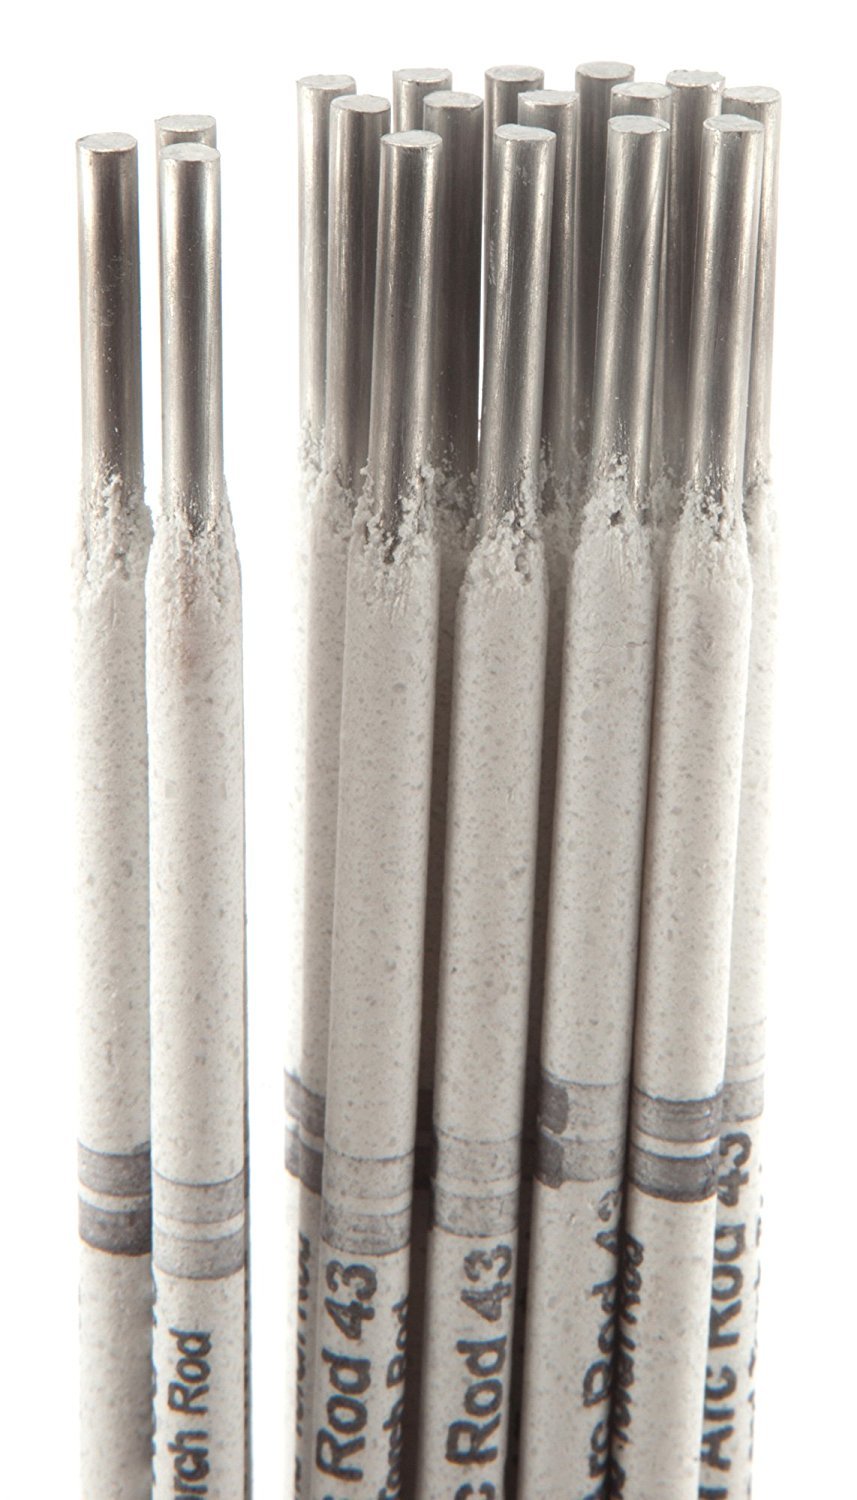 400g - 4.0mm Cast Iron Nickel Stick Electrodes - ENi99